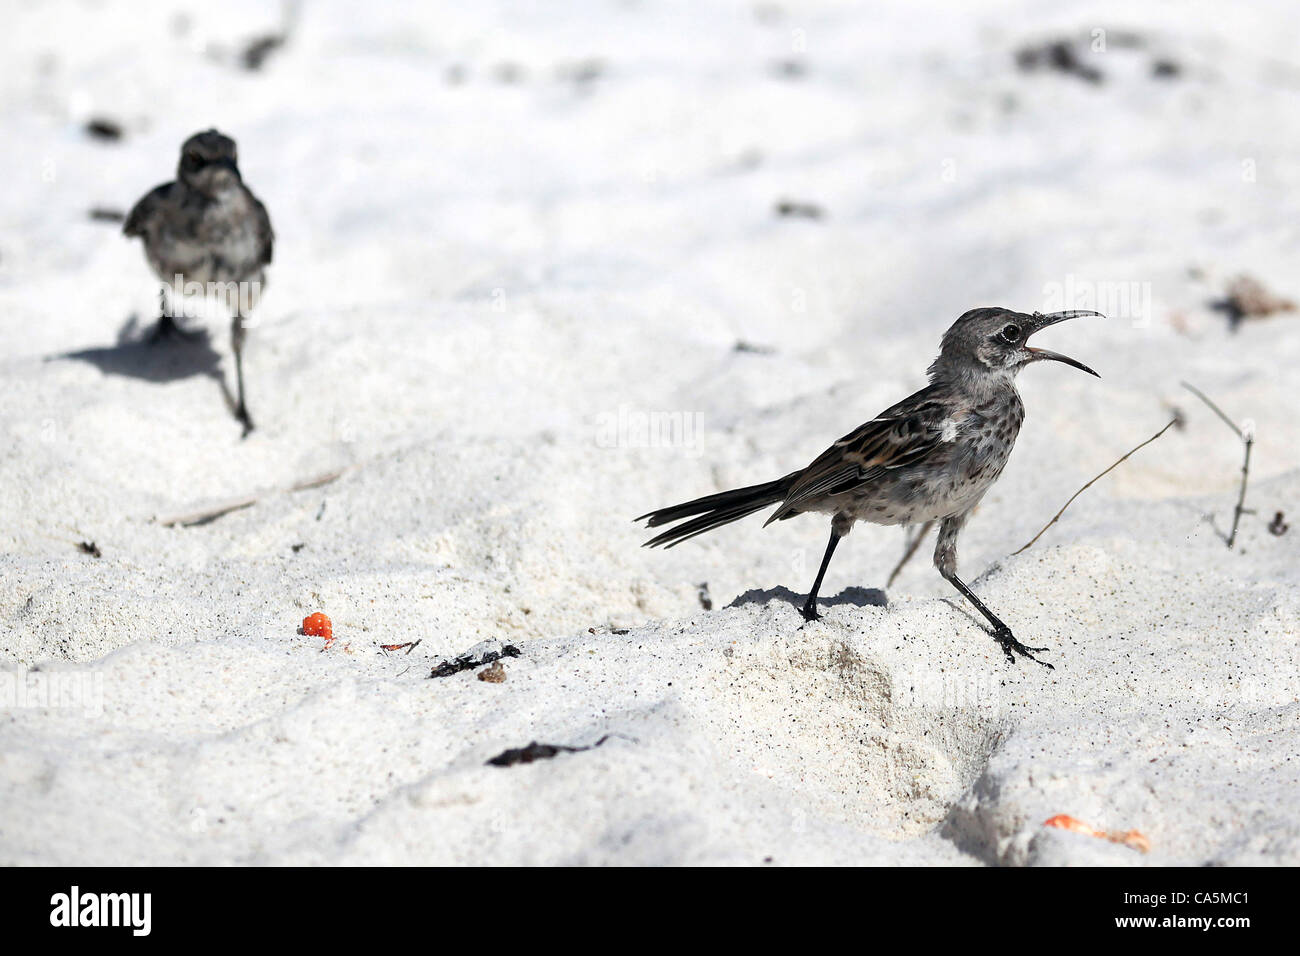 Giugno 12, 2012 - All'Isola Espanola, Galapagos, Ecuador - Due mockingbirds cofano sono fotografati su una spiaggia all'Isola Espanola nelle Galapagos. (Credito Immagine: © Julia Cumes/ZUMAPRESS.com) Foto Stock